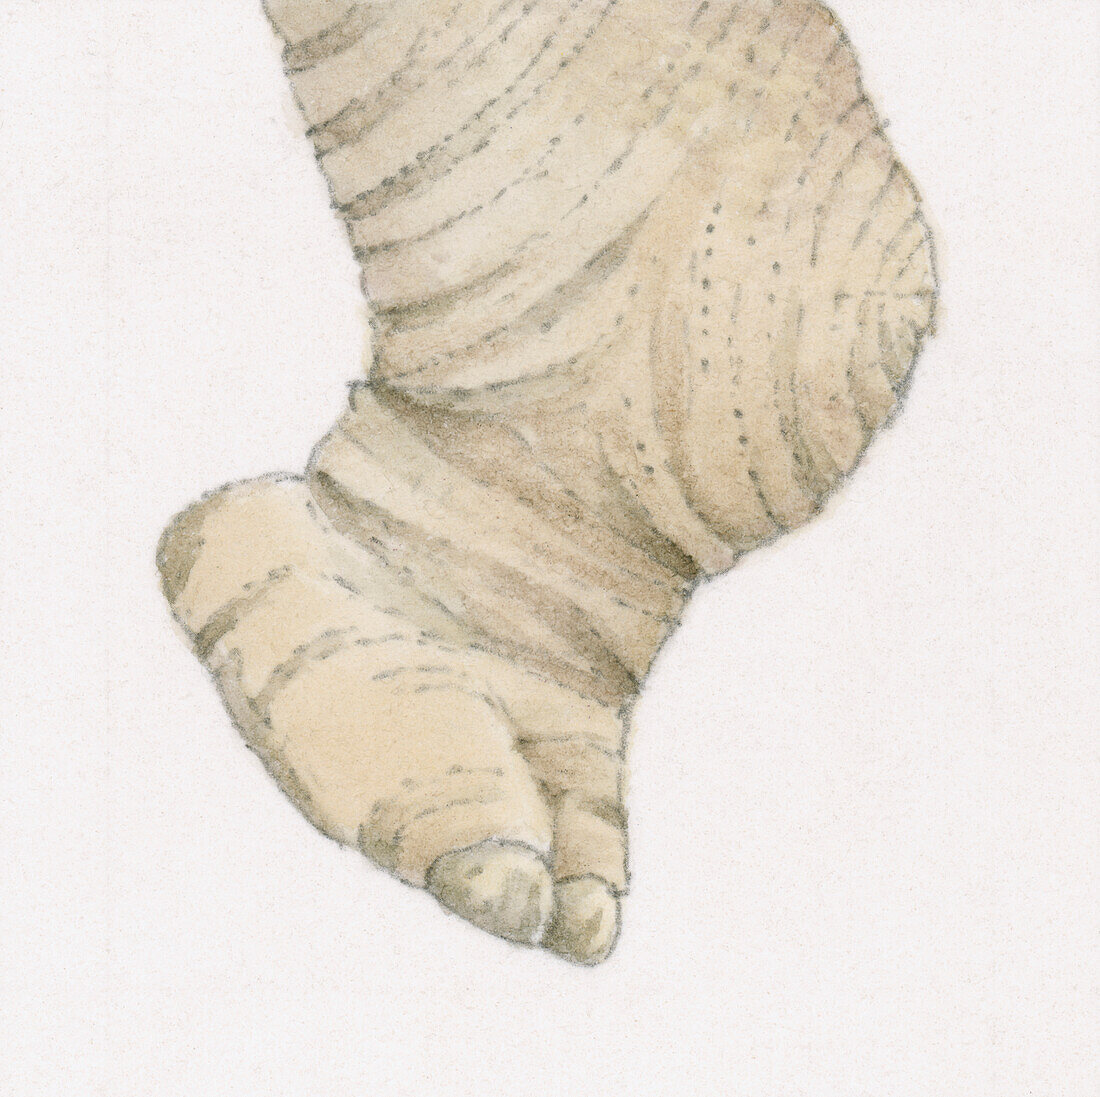 Elephant's foot, illustration